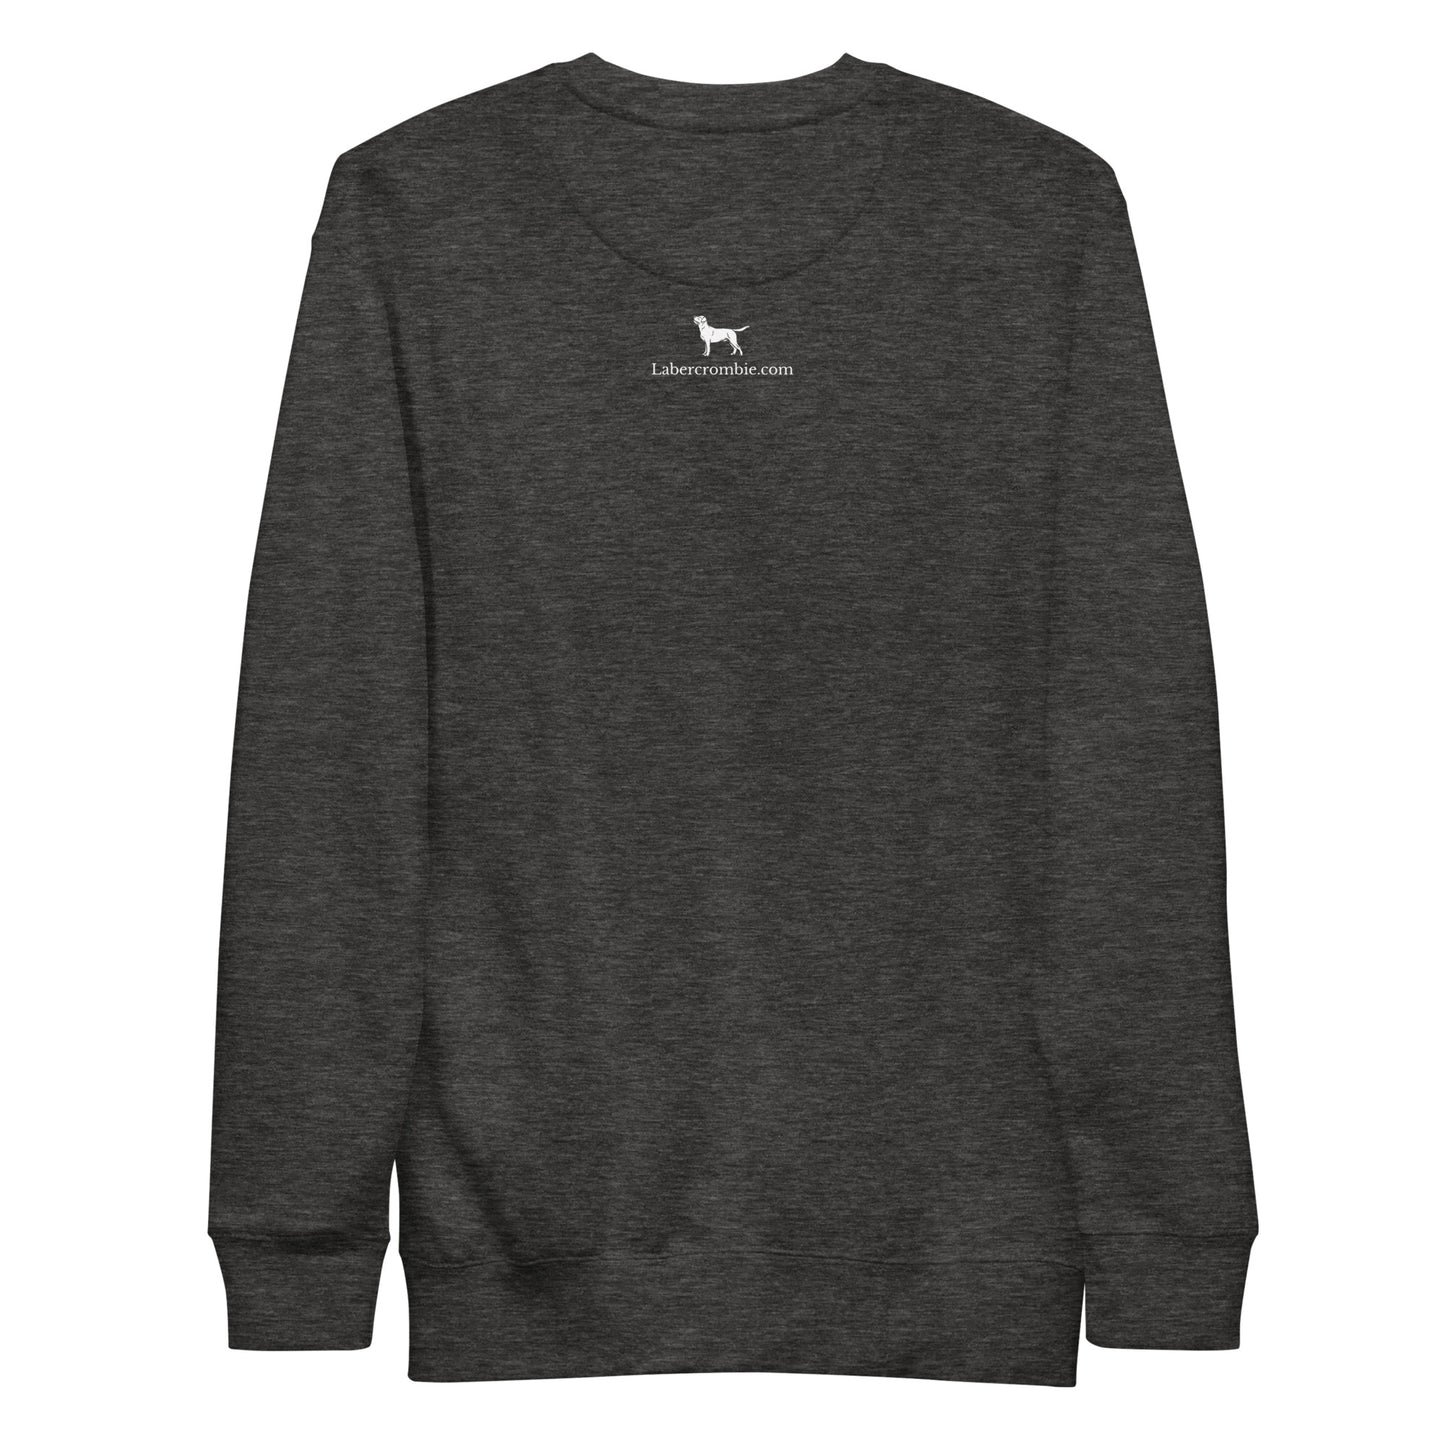 The Dog Unisex Premium Sweatshirt